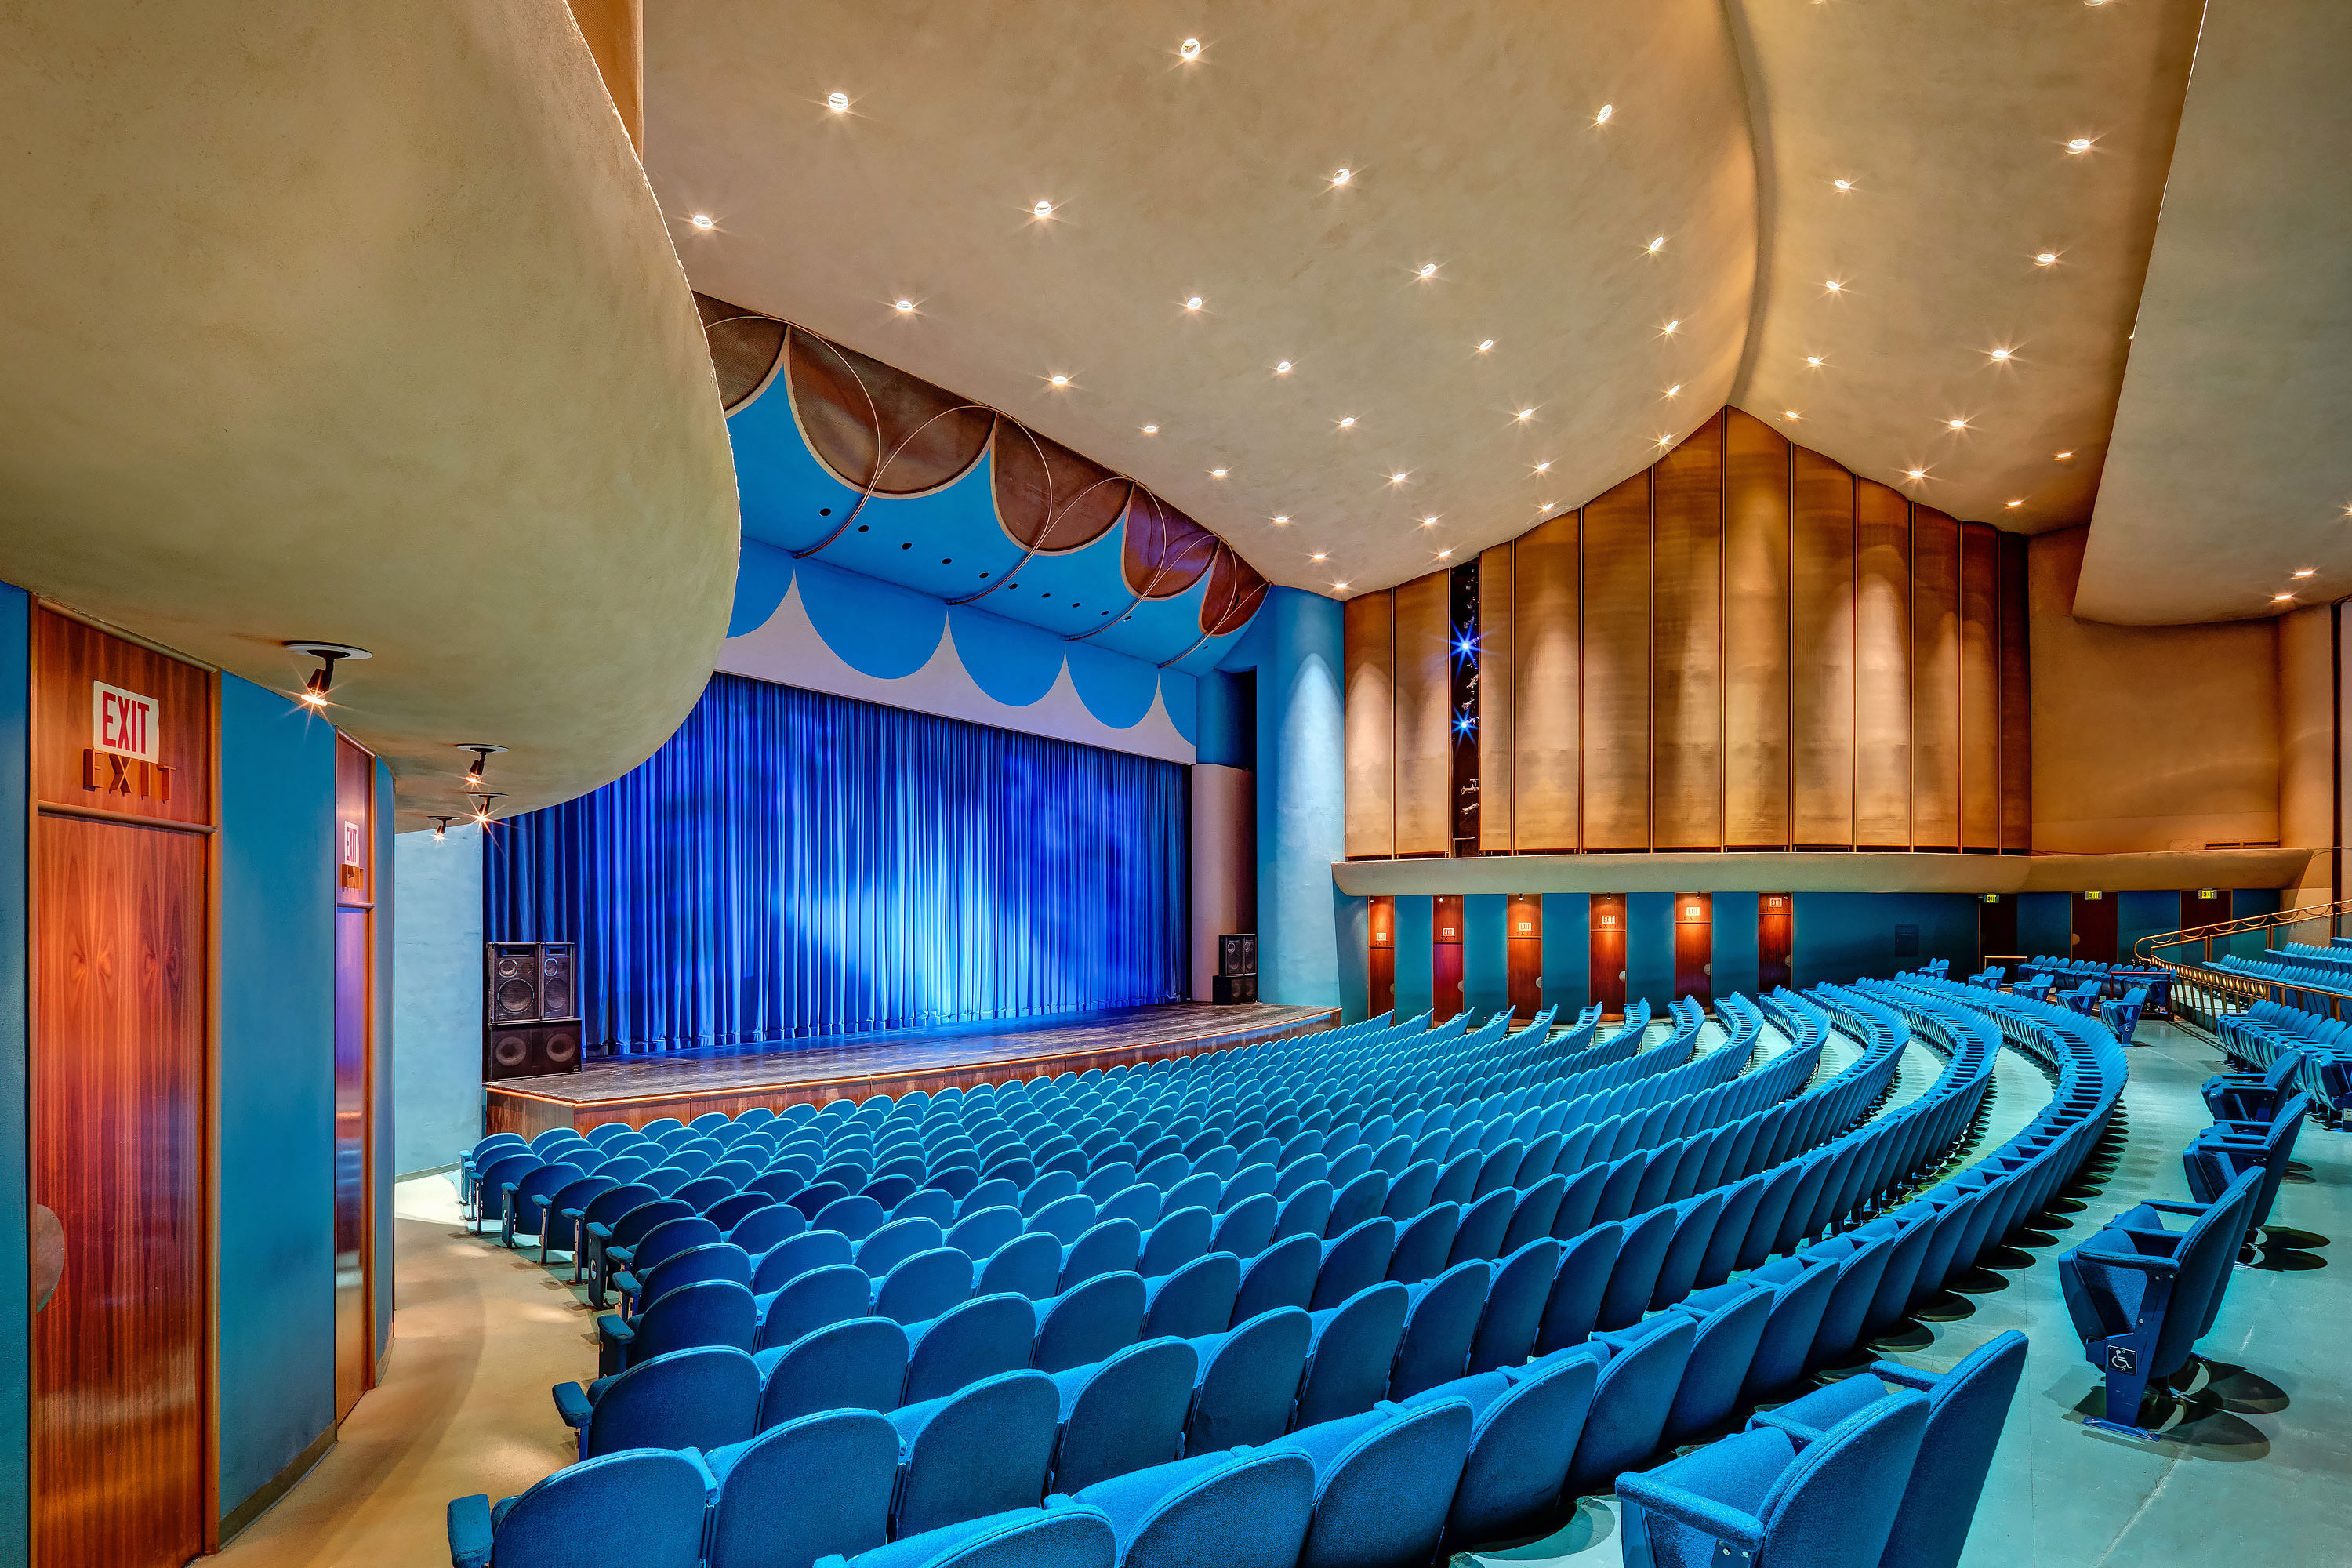 Veterans Memorial Auditorium - san Rafael, California. Architecture Photography by Alan Blakely. 